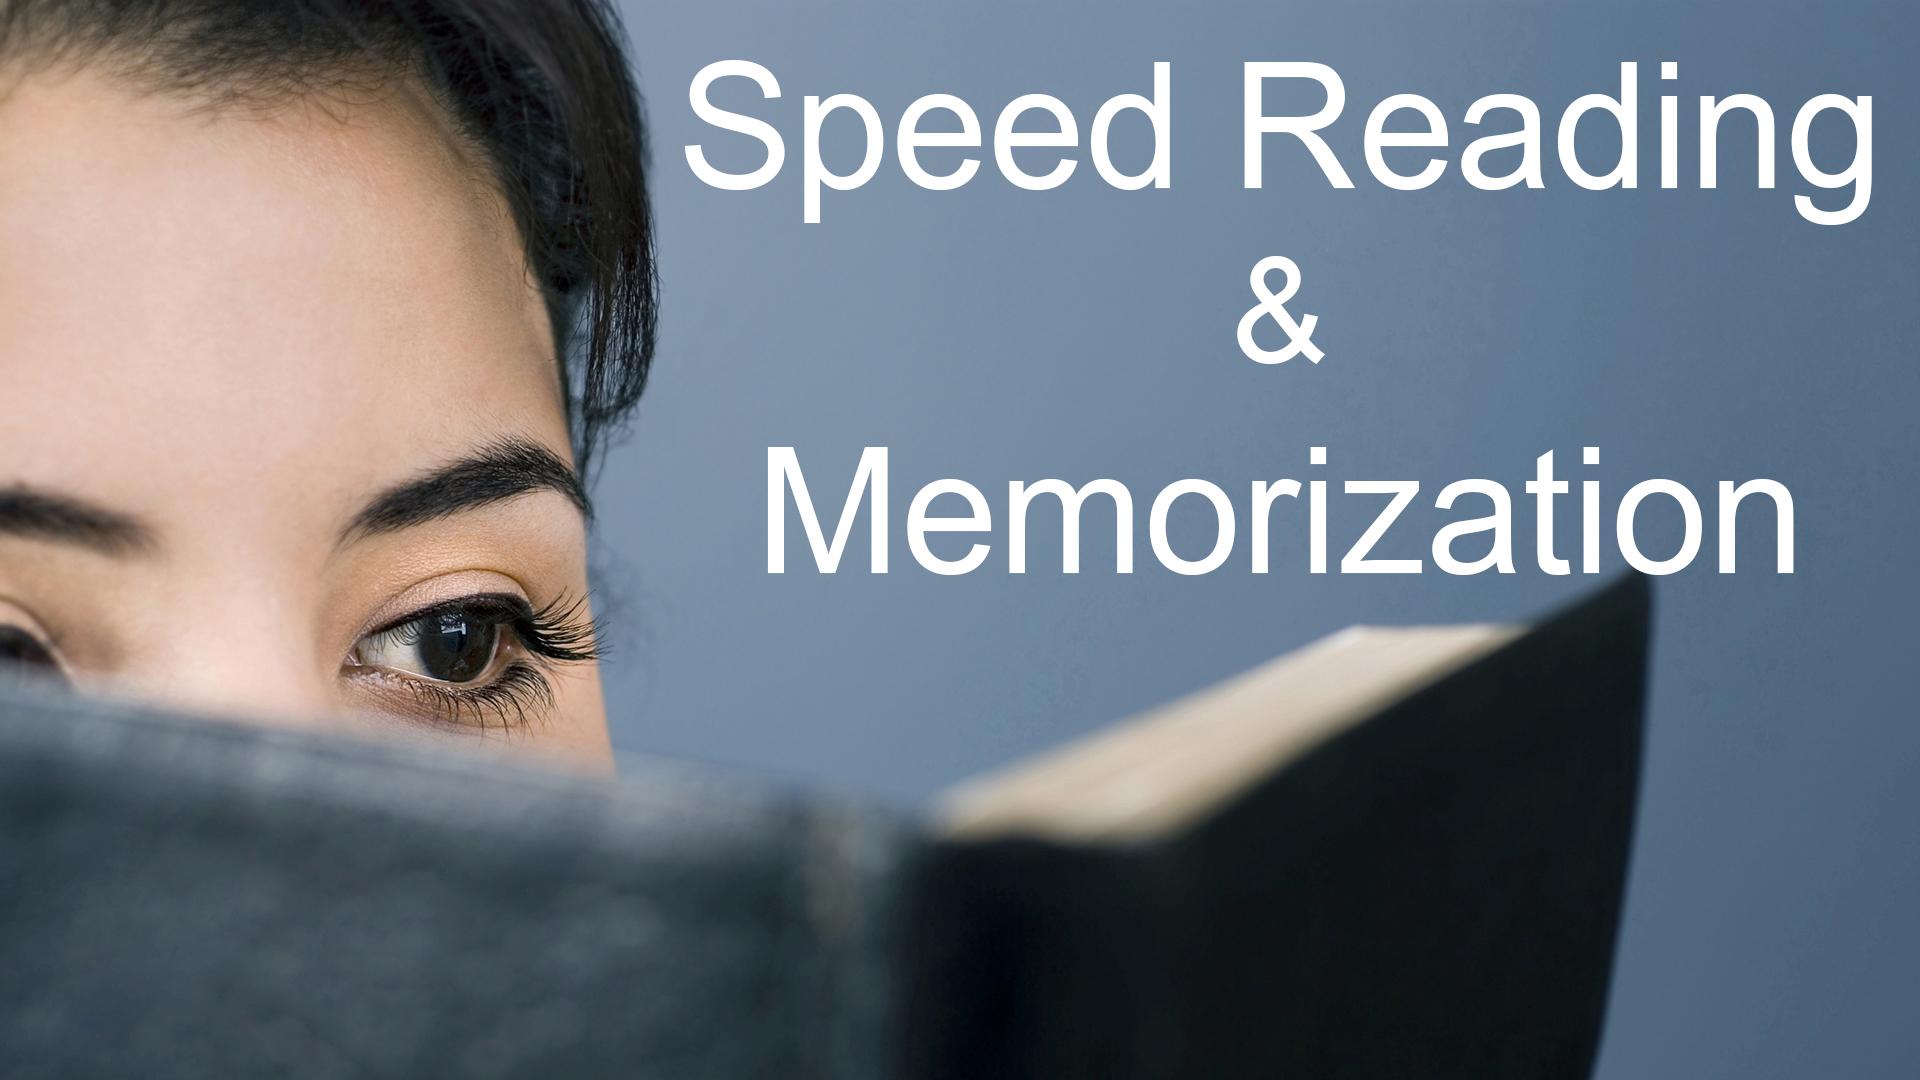 Speed Reading & Memorization Class in Minneapolis